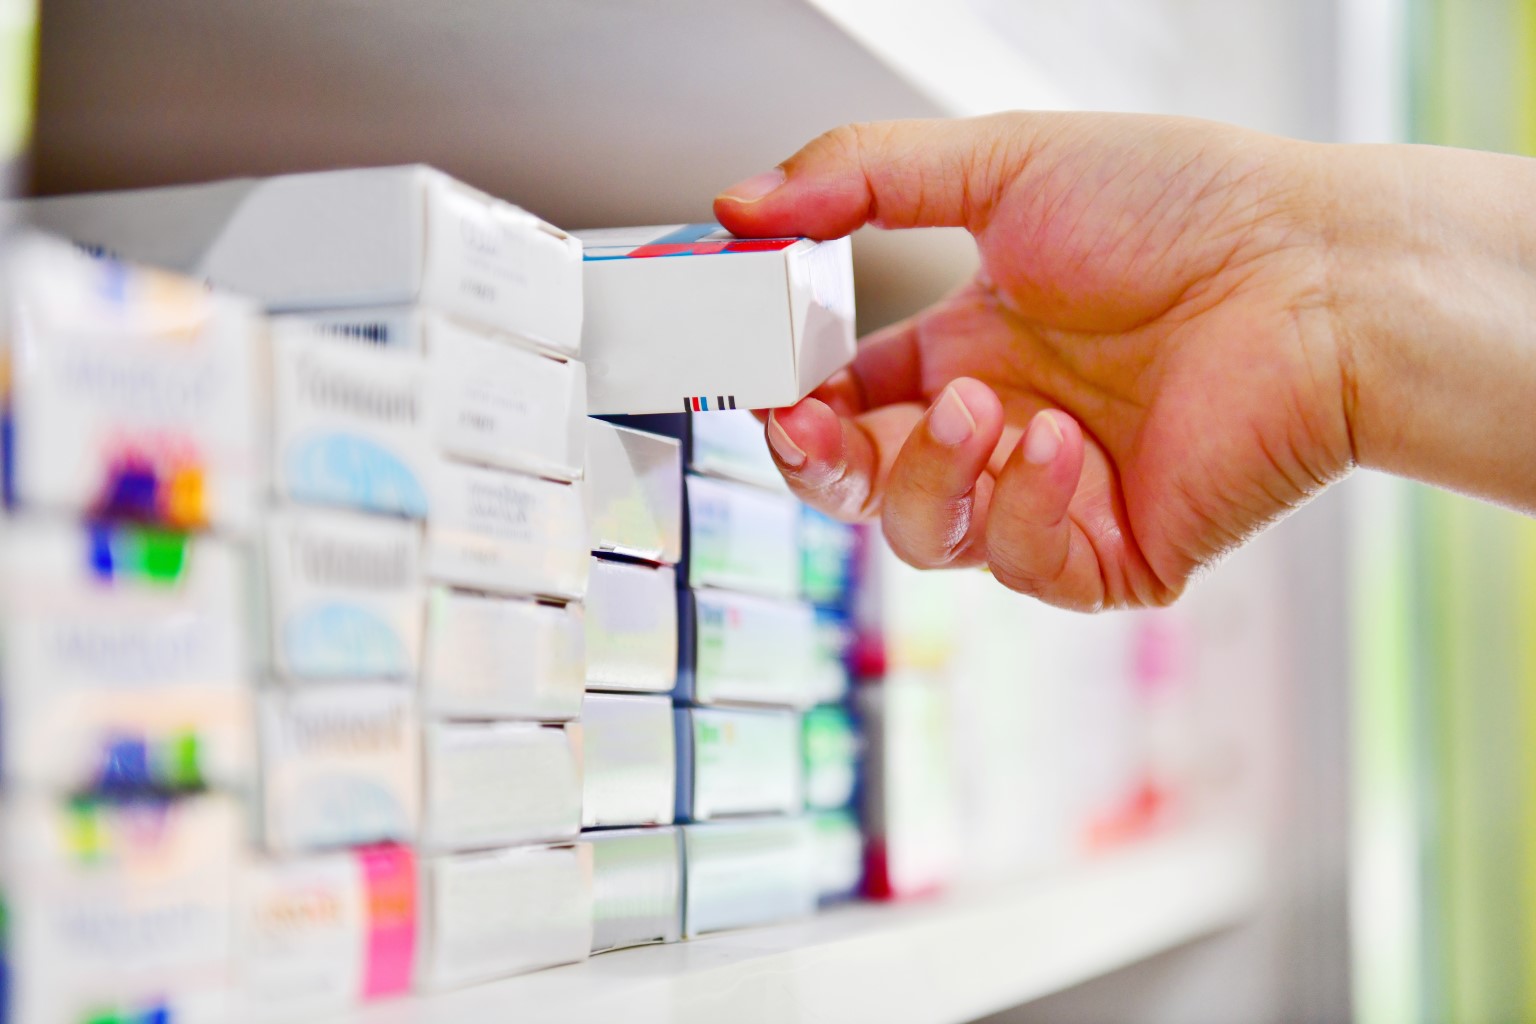 Pharmacist selecting medication